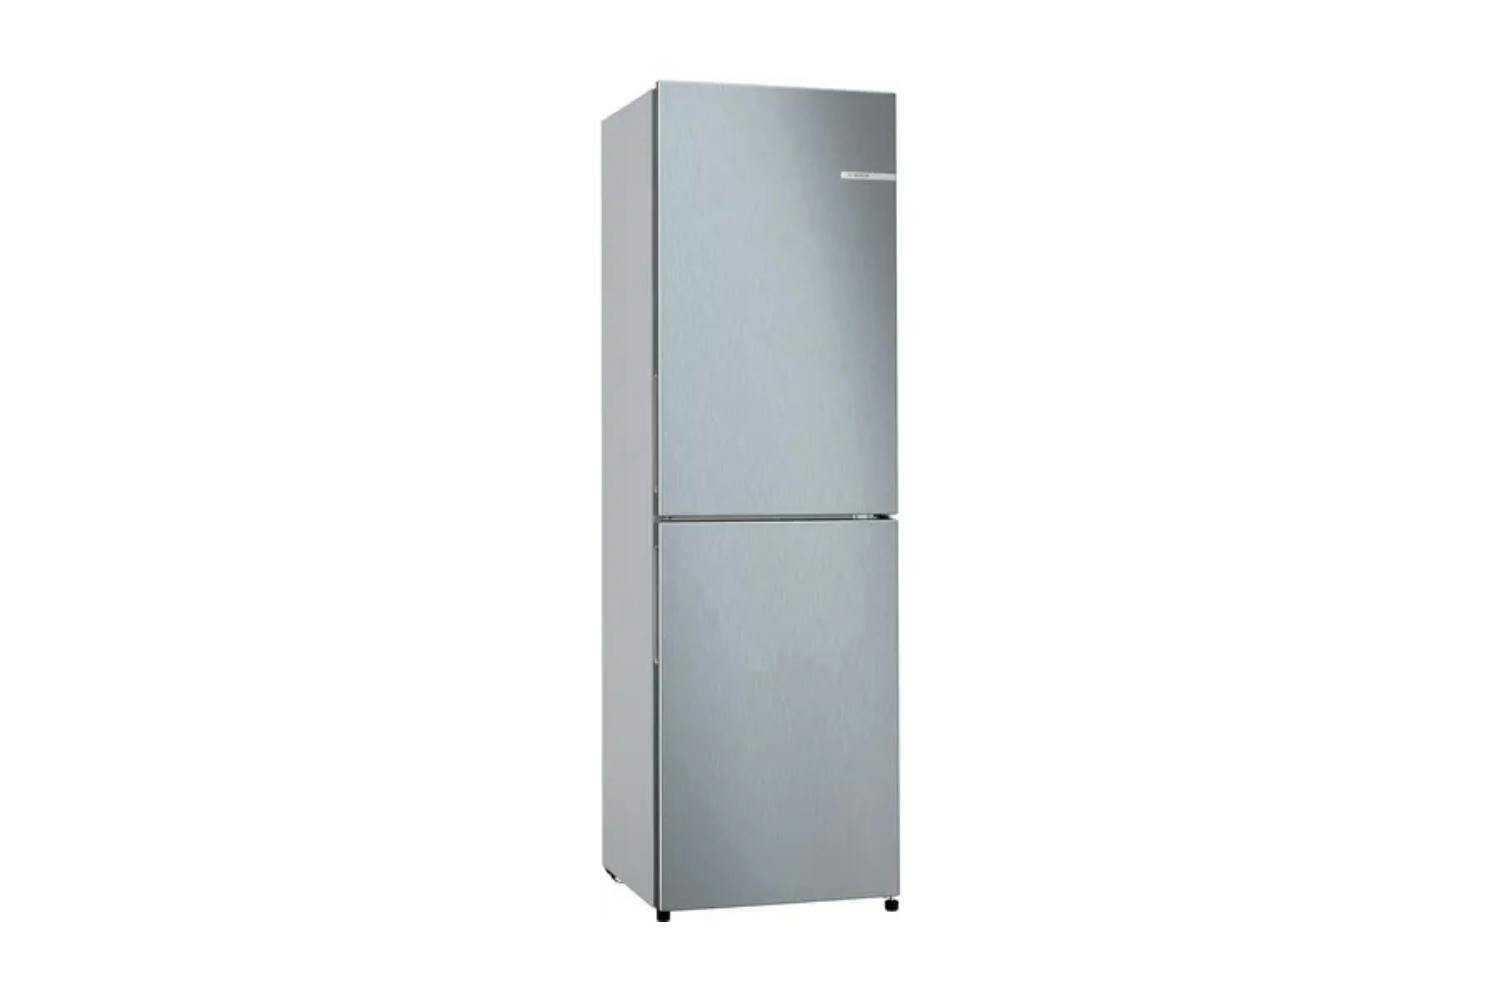 Bosch Series 2 Free Standing Fridge Freezer with Freezer at Bottom | KGN27NLEAG